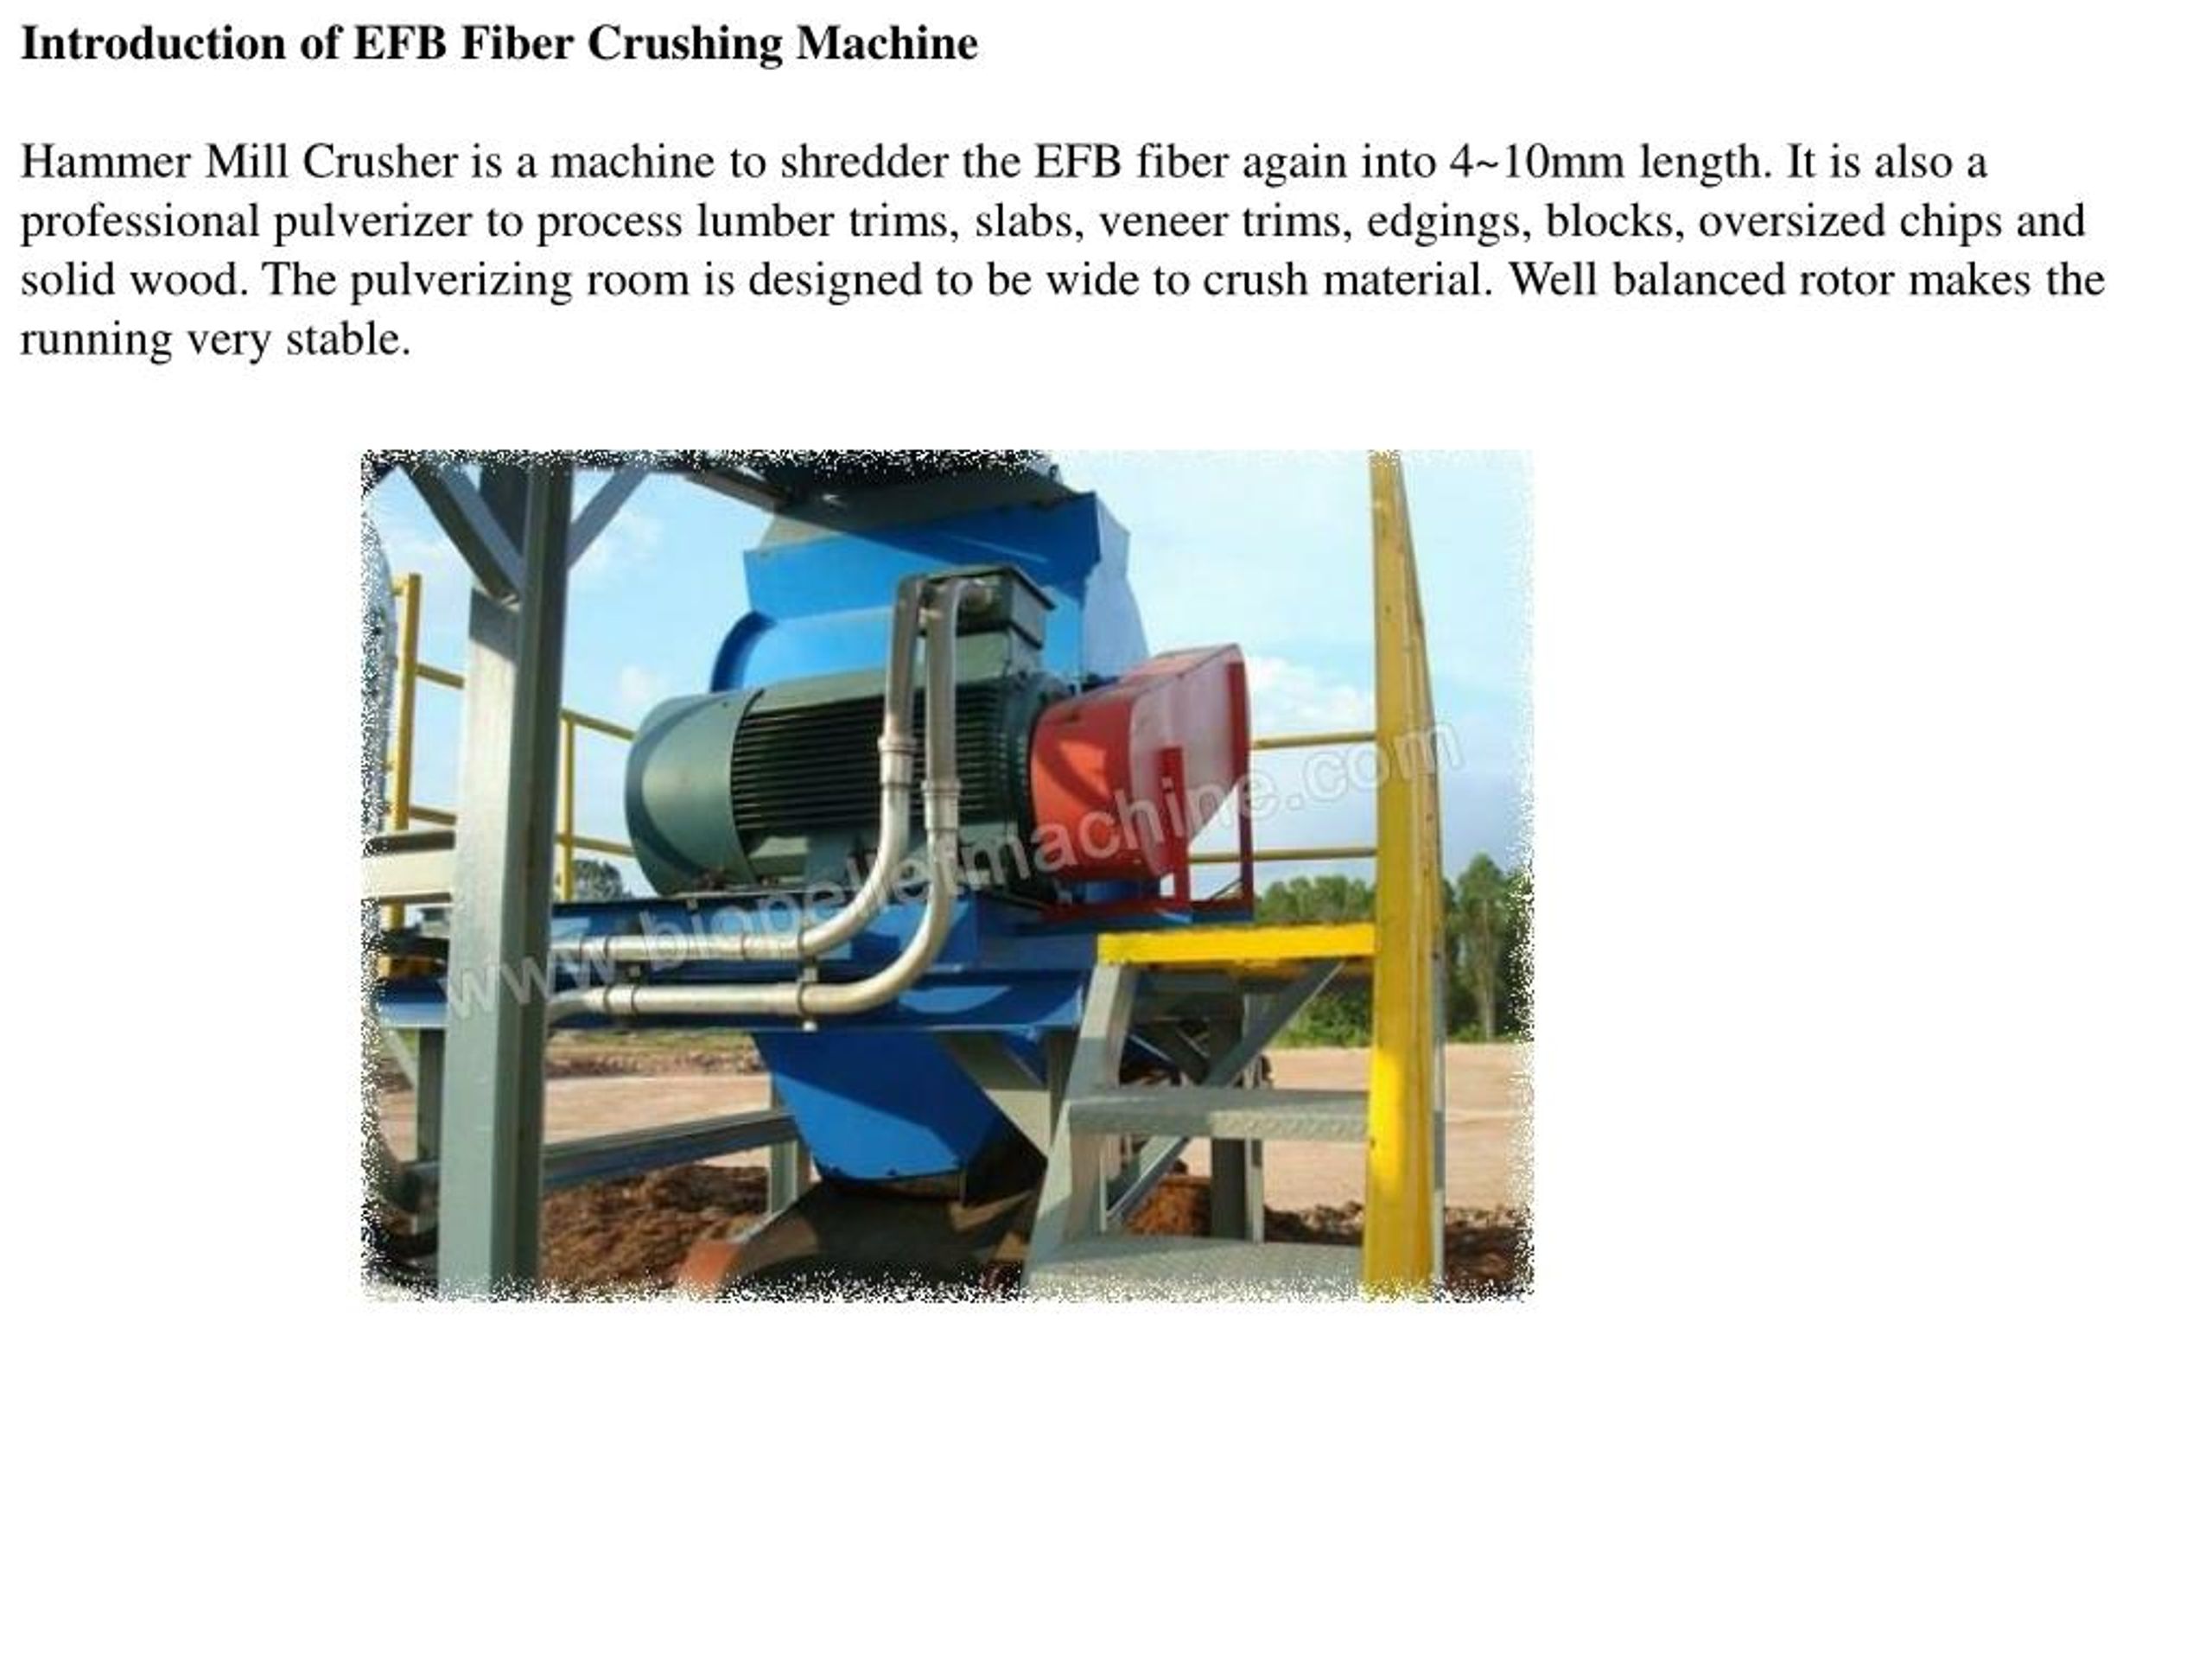 Empty Fruit Bunch Shredder, EFB Fiber Crushing Machine